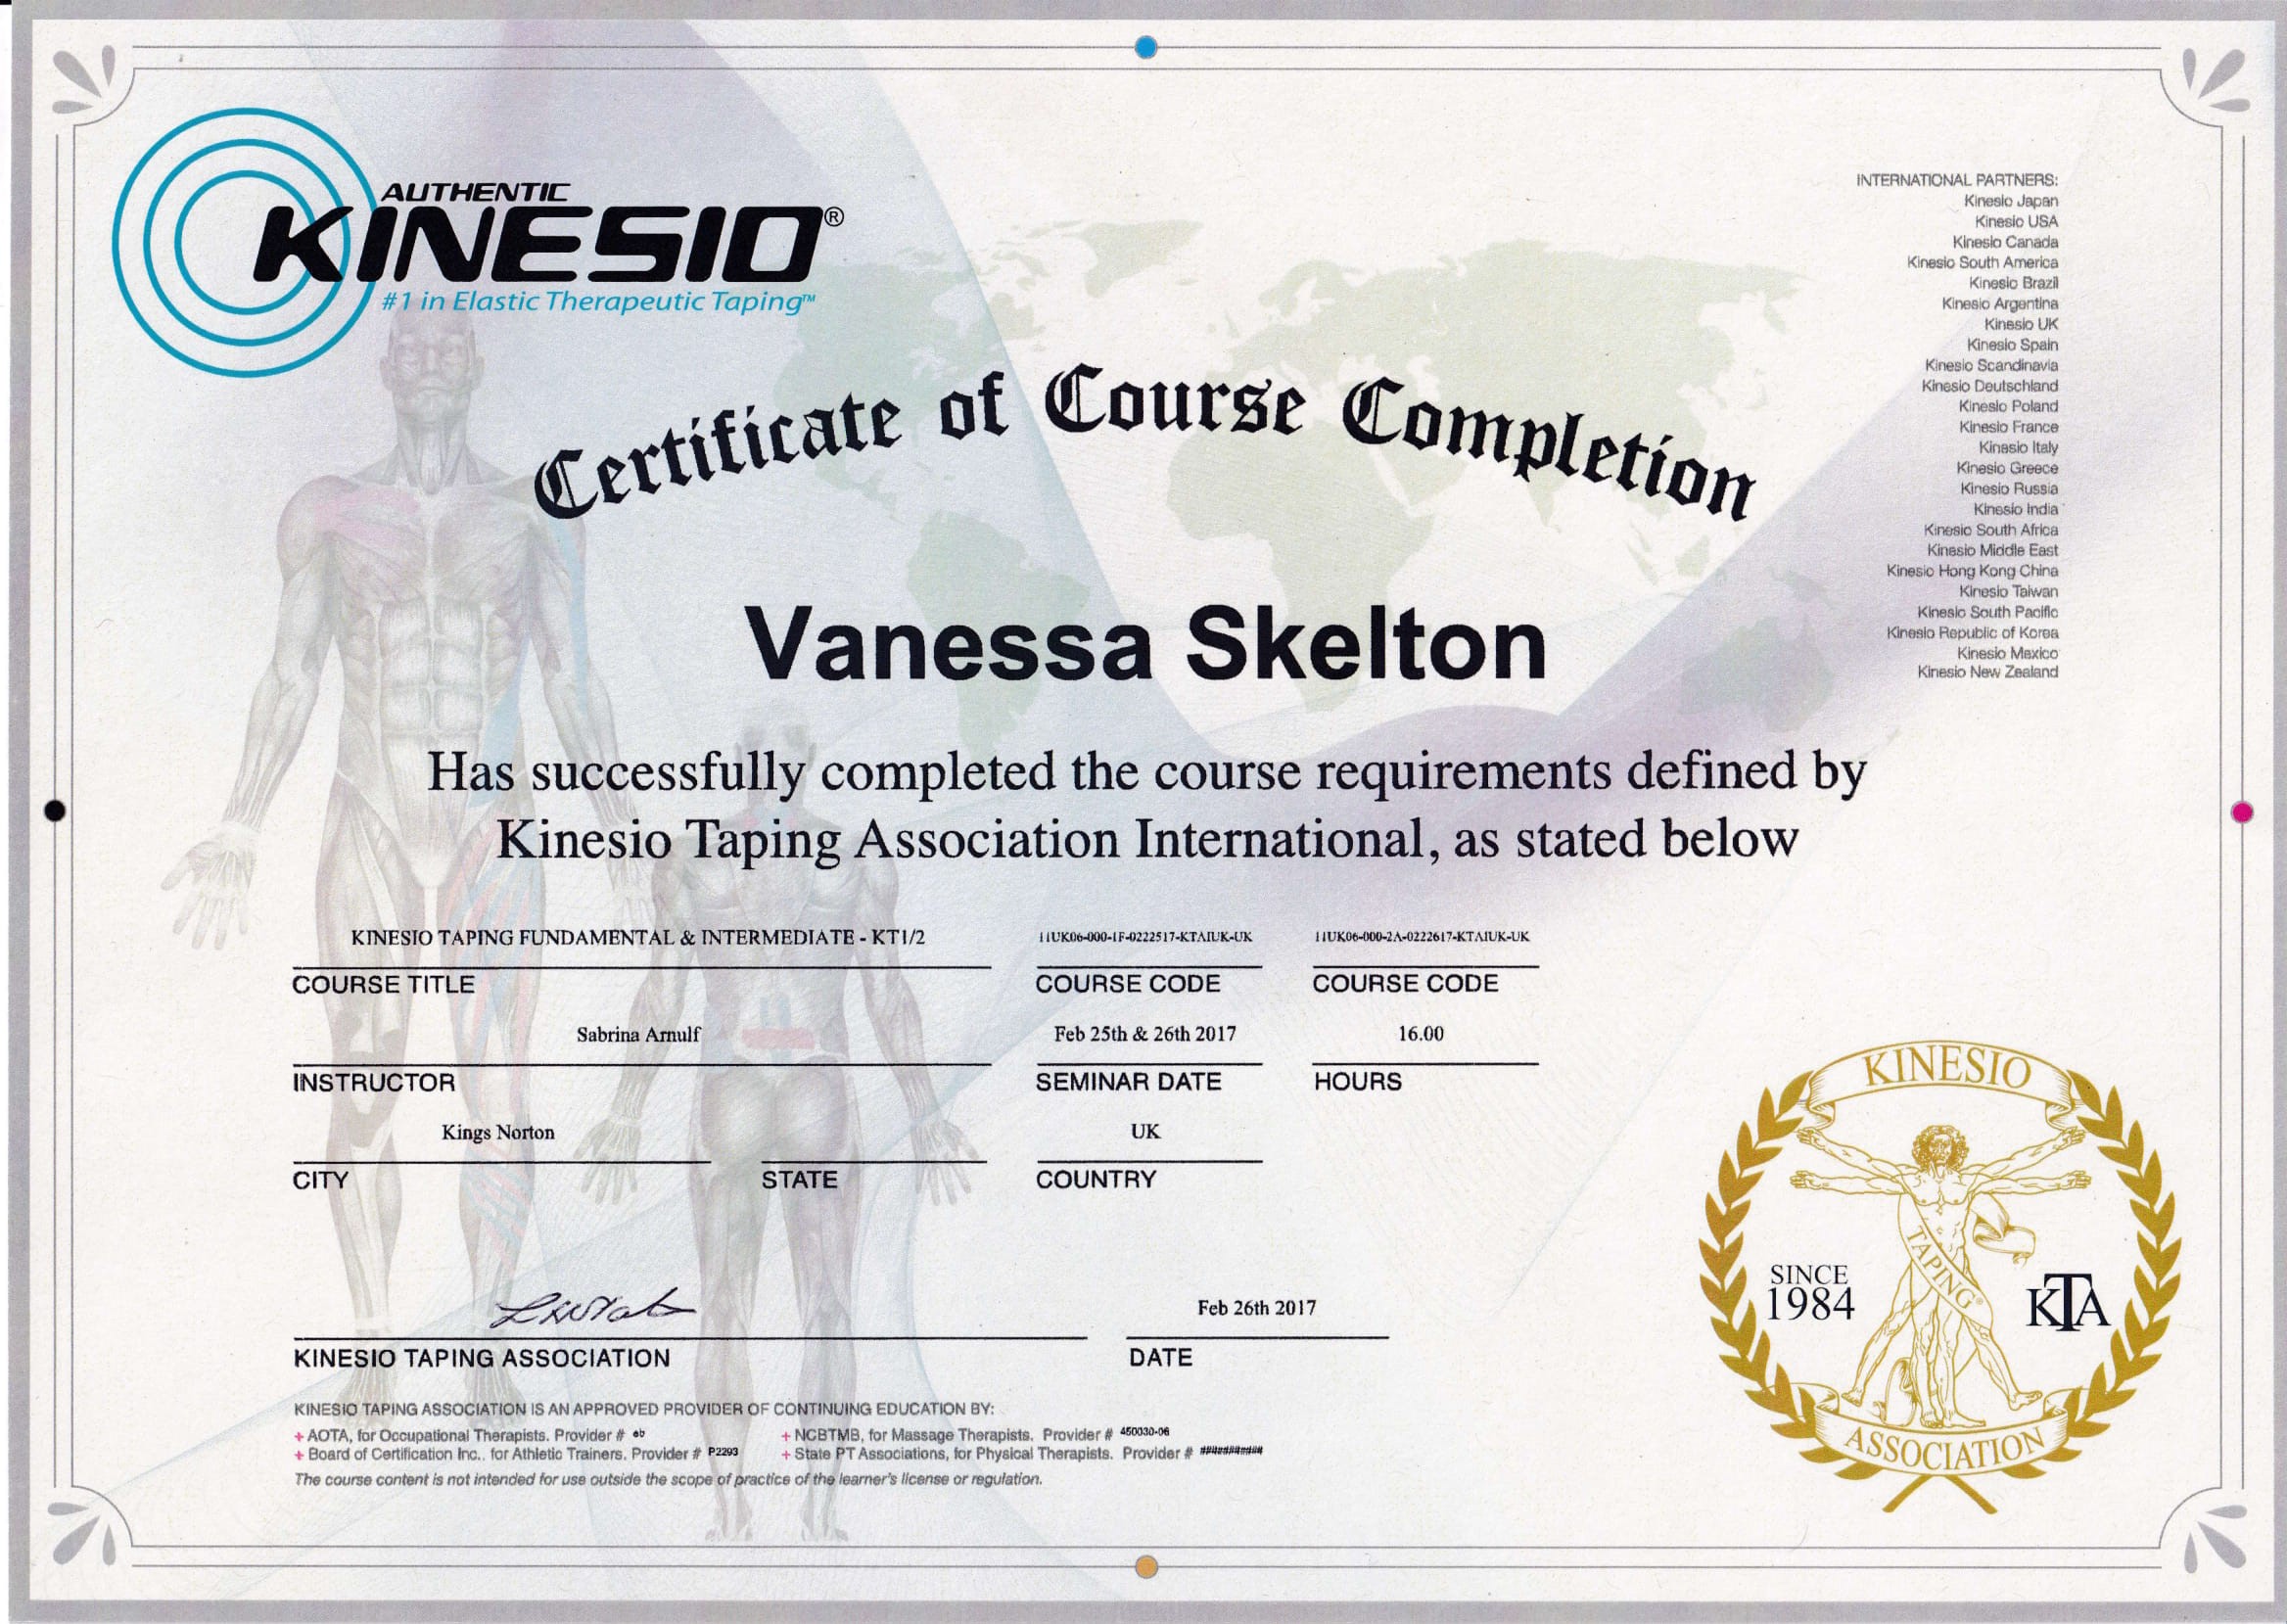 kinesio taping certificate 26.2.17-1.jpg